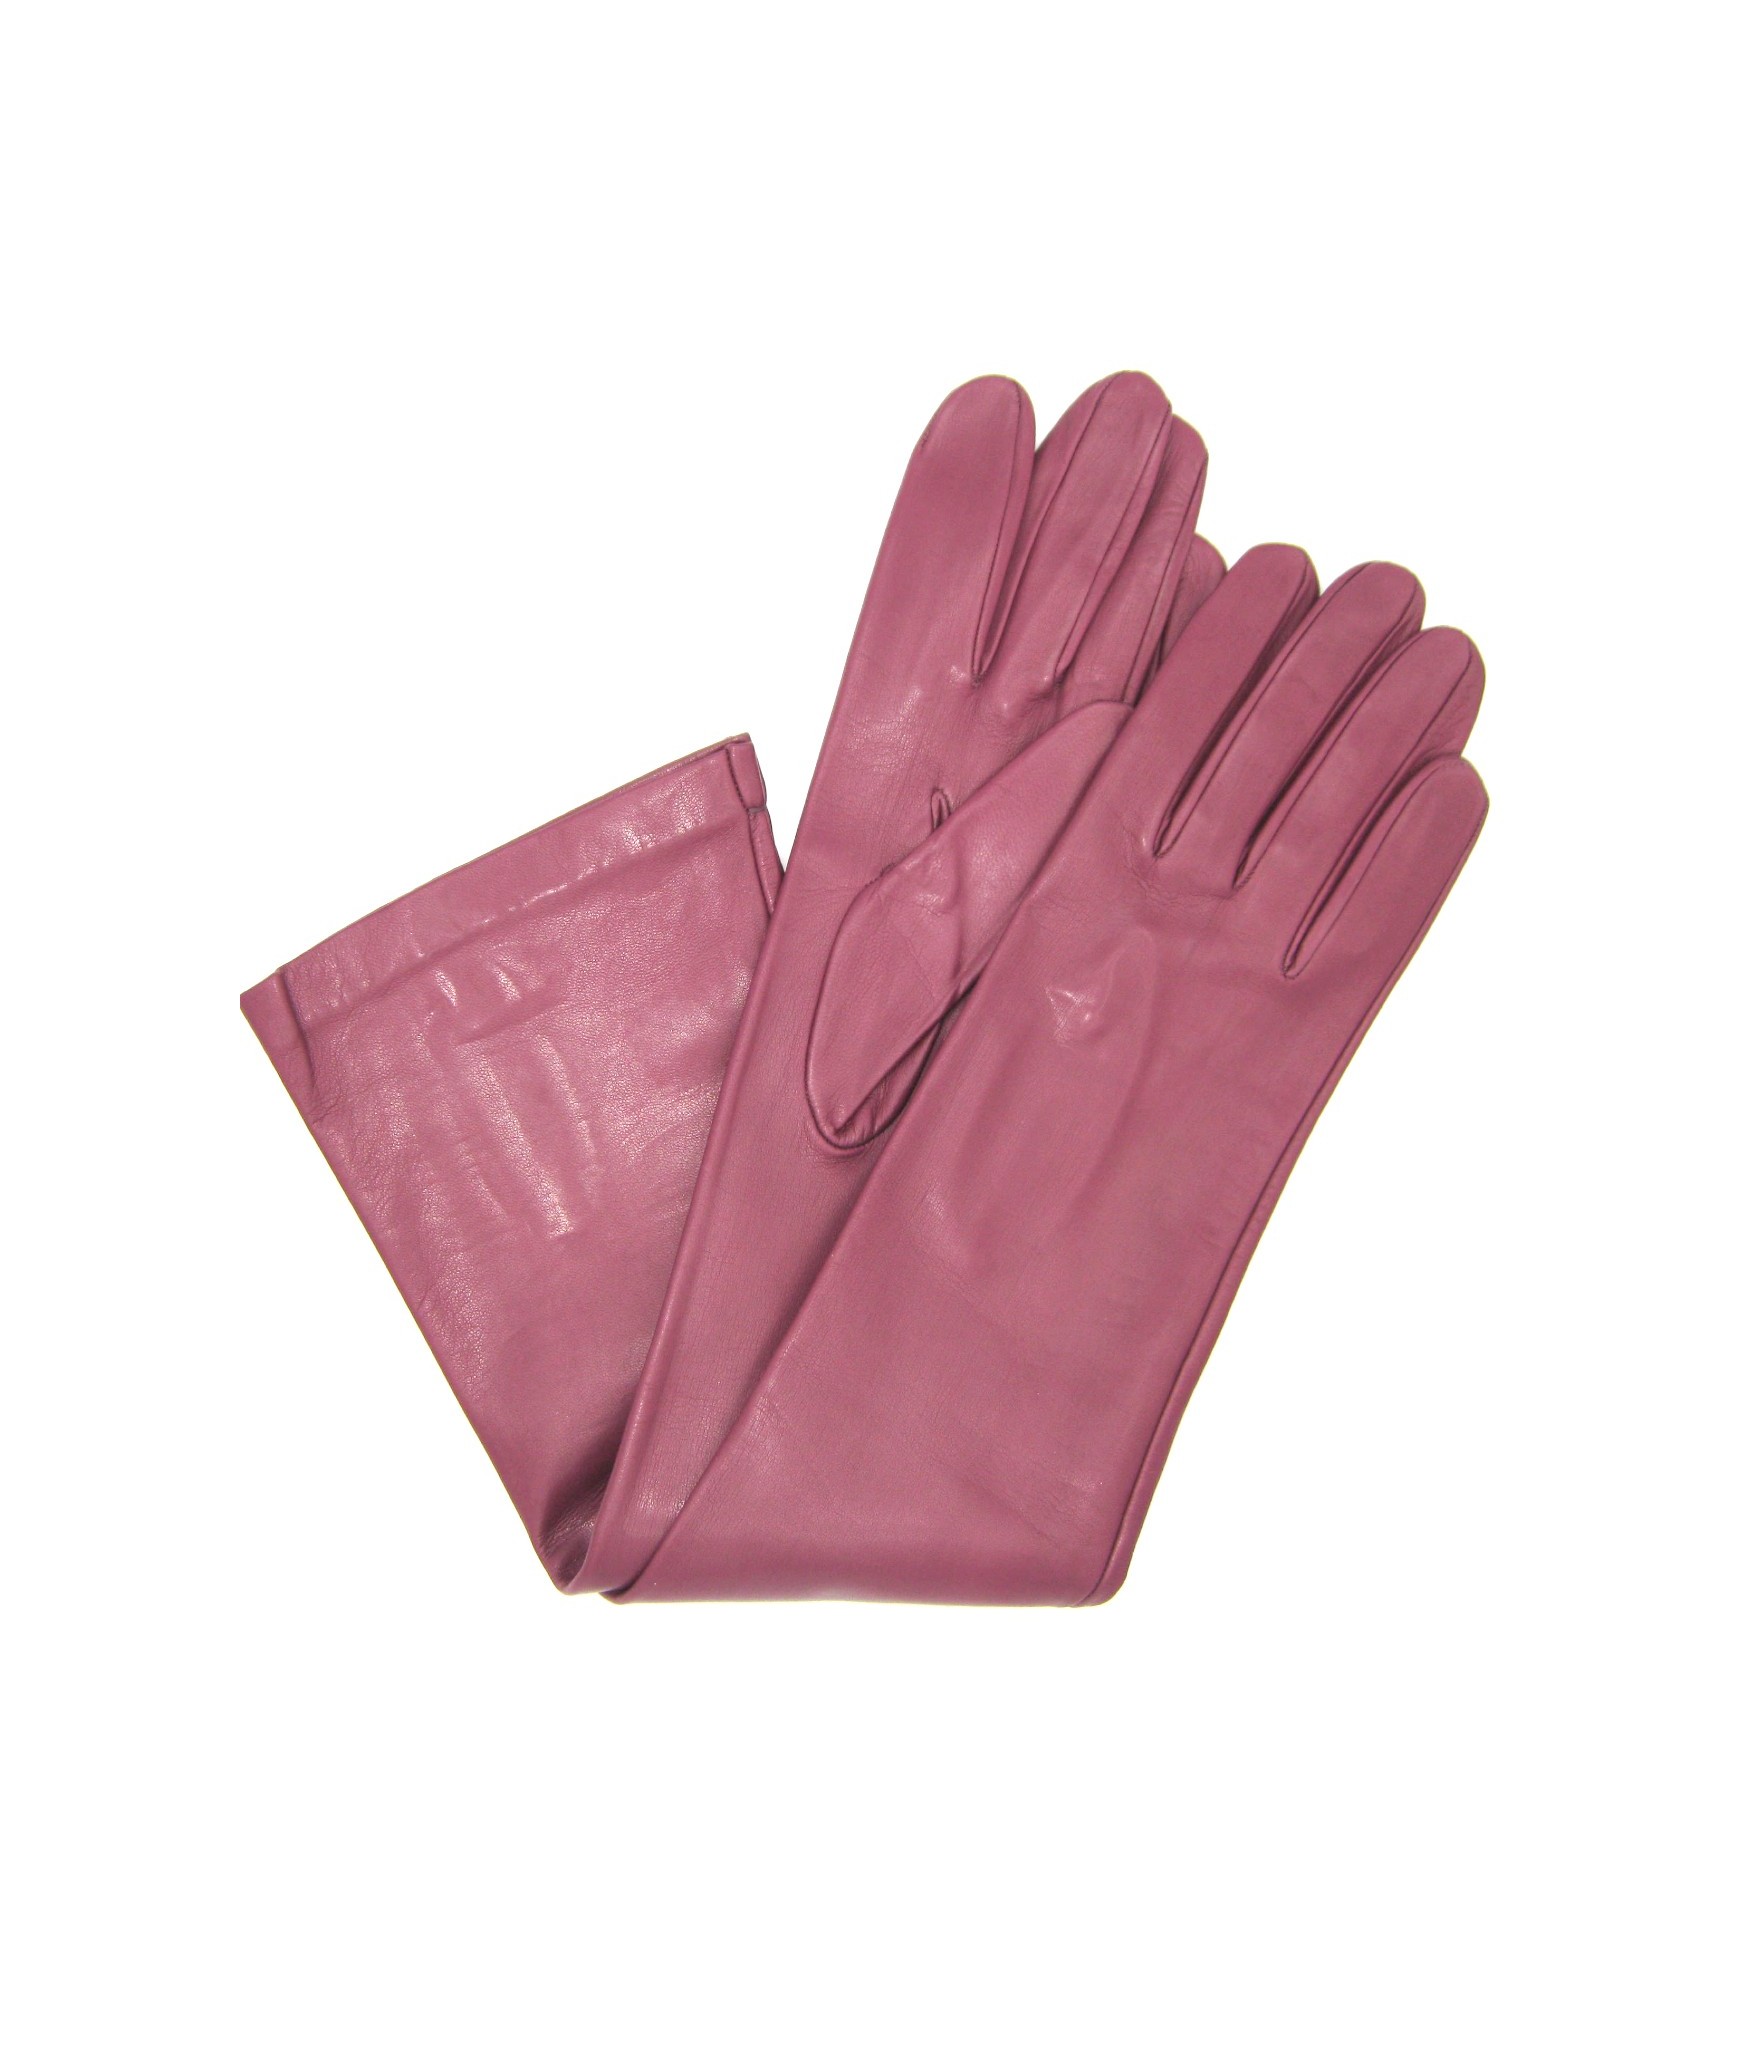 женщина Fashion Nappa leather gloves 10bt silk lined Magenta